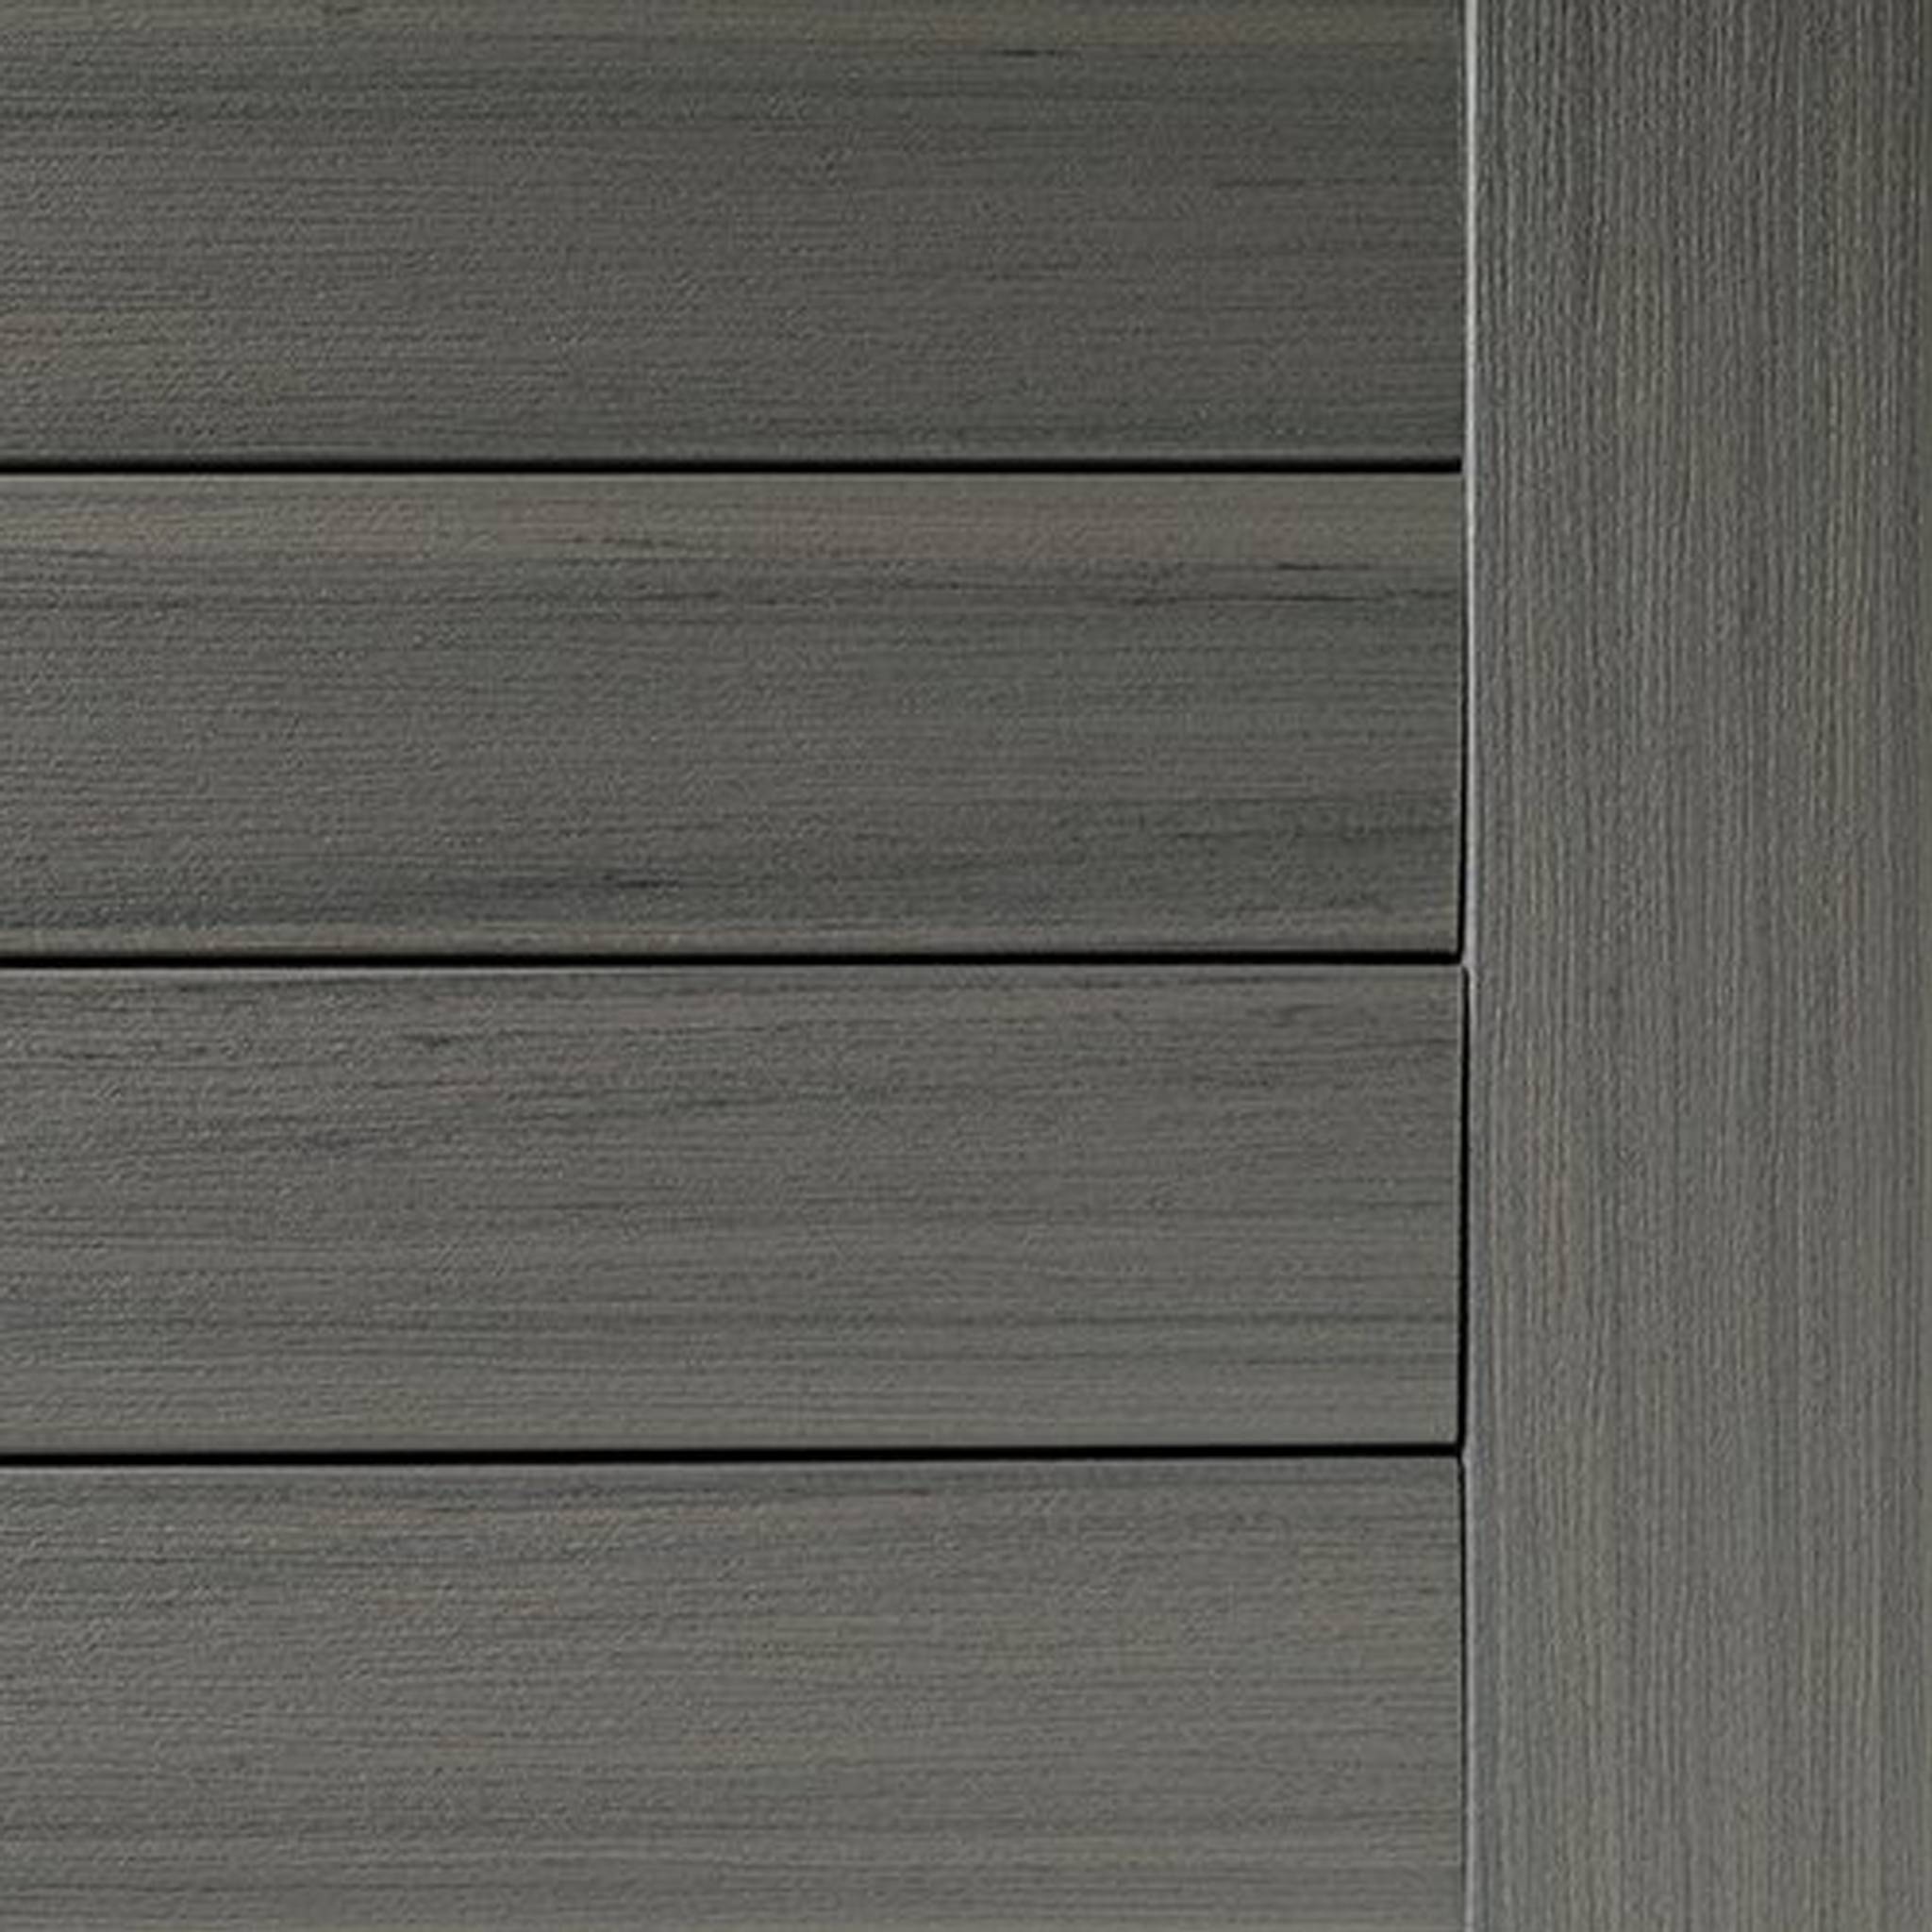 close up look of TimberTech EdgePrime+ Collection - Sea Salt Grey composite deck boards